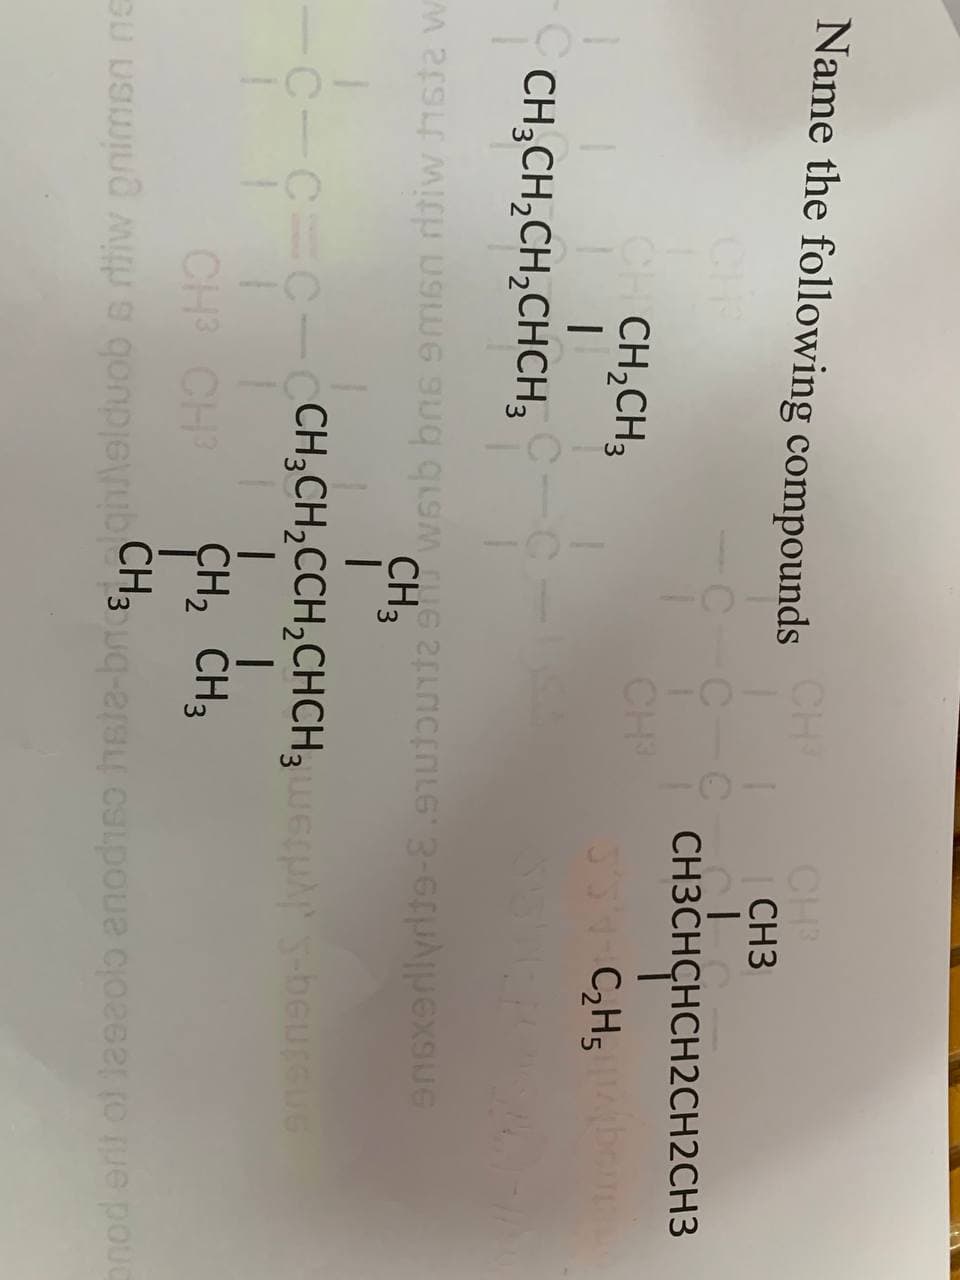 Name the following compounds
CH
CH
CH3
CH
C-C
CH3CHCHCH2CH2CH3
CH CH,CH3
CH
CH5
CH3CH,CH,CHCH3
C-C-
CH3
C-C C-CCH;CH,CCH,CHCH3 -beursuc
CH CH
CH, CH3
SU UsWIud mu a gonpjeub CH3 ug-ersu CaLpoue coesetoe poud
